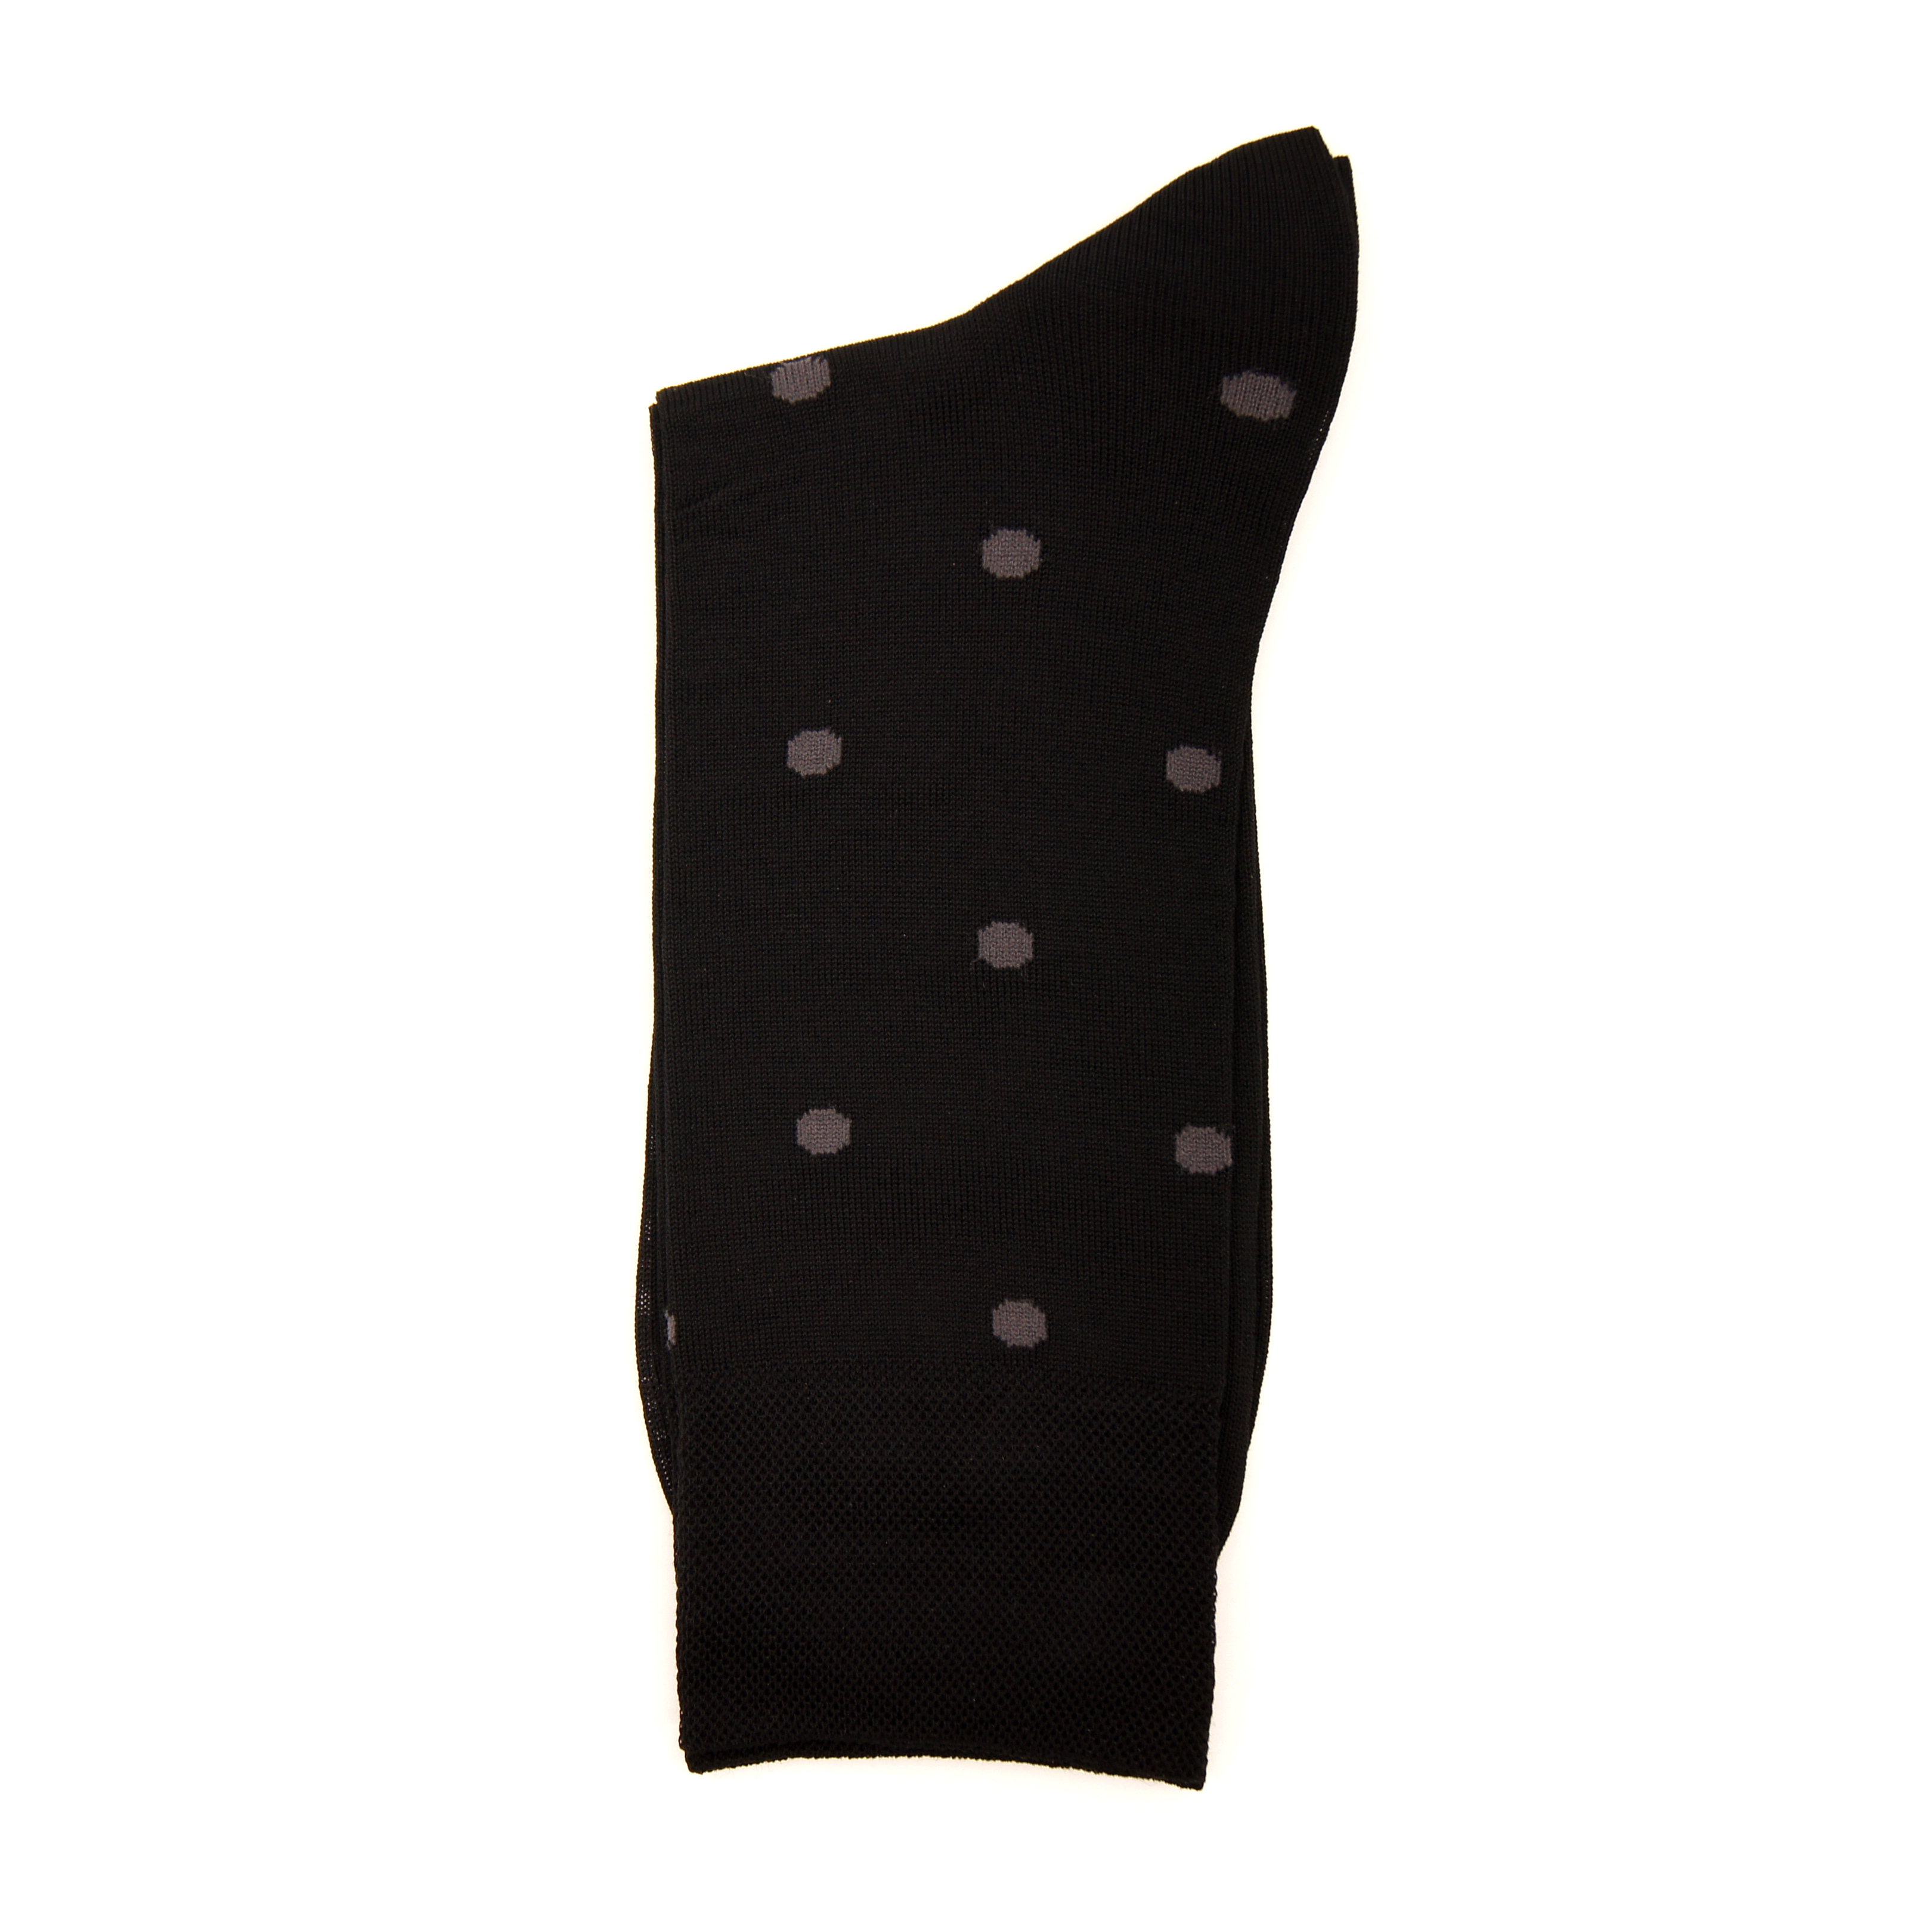 Носки Tezido Luxury Mercerized Cotton Dots Т1004 (черный/металлический)